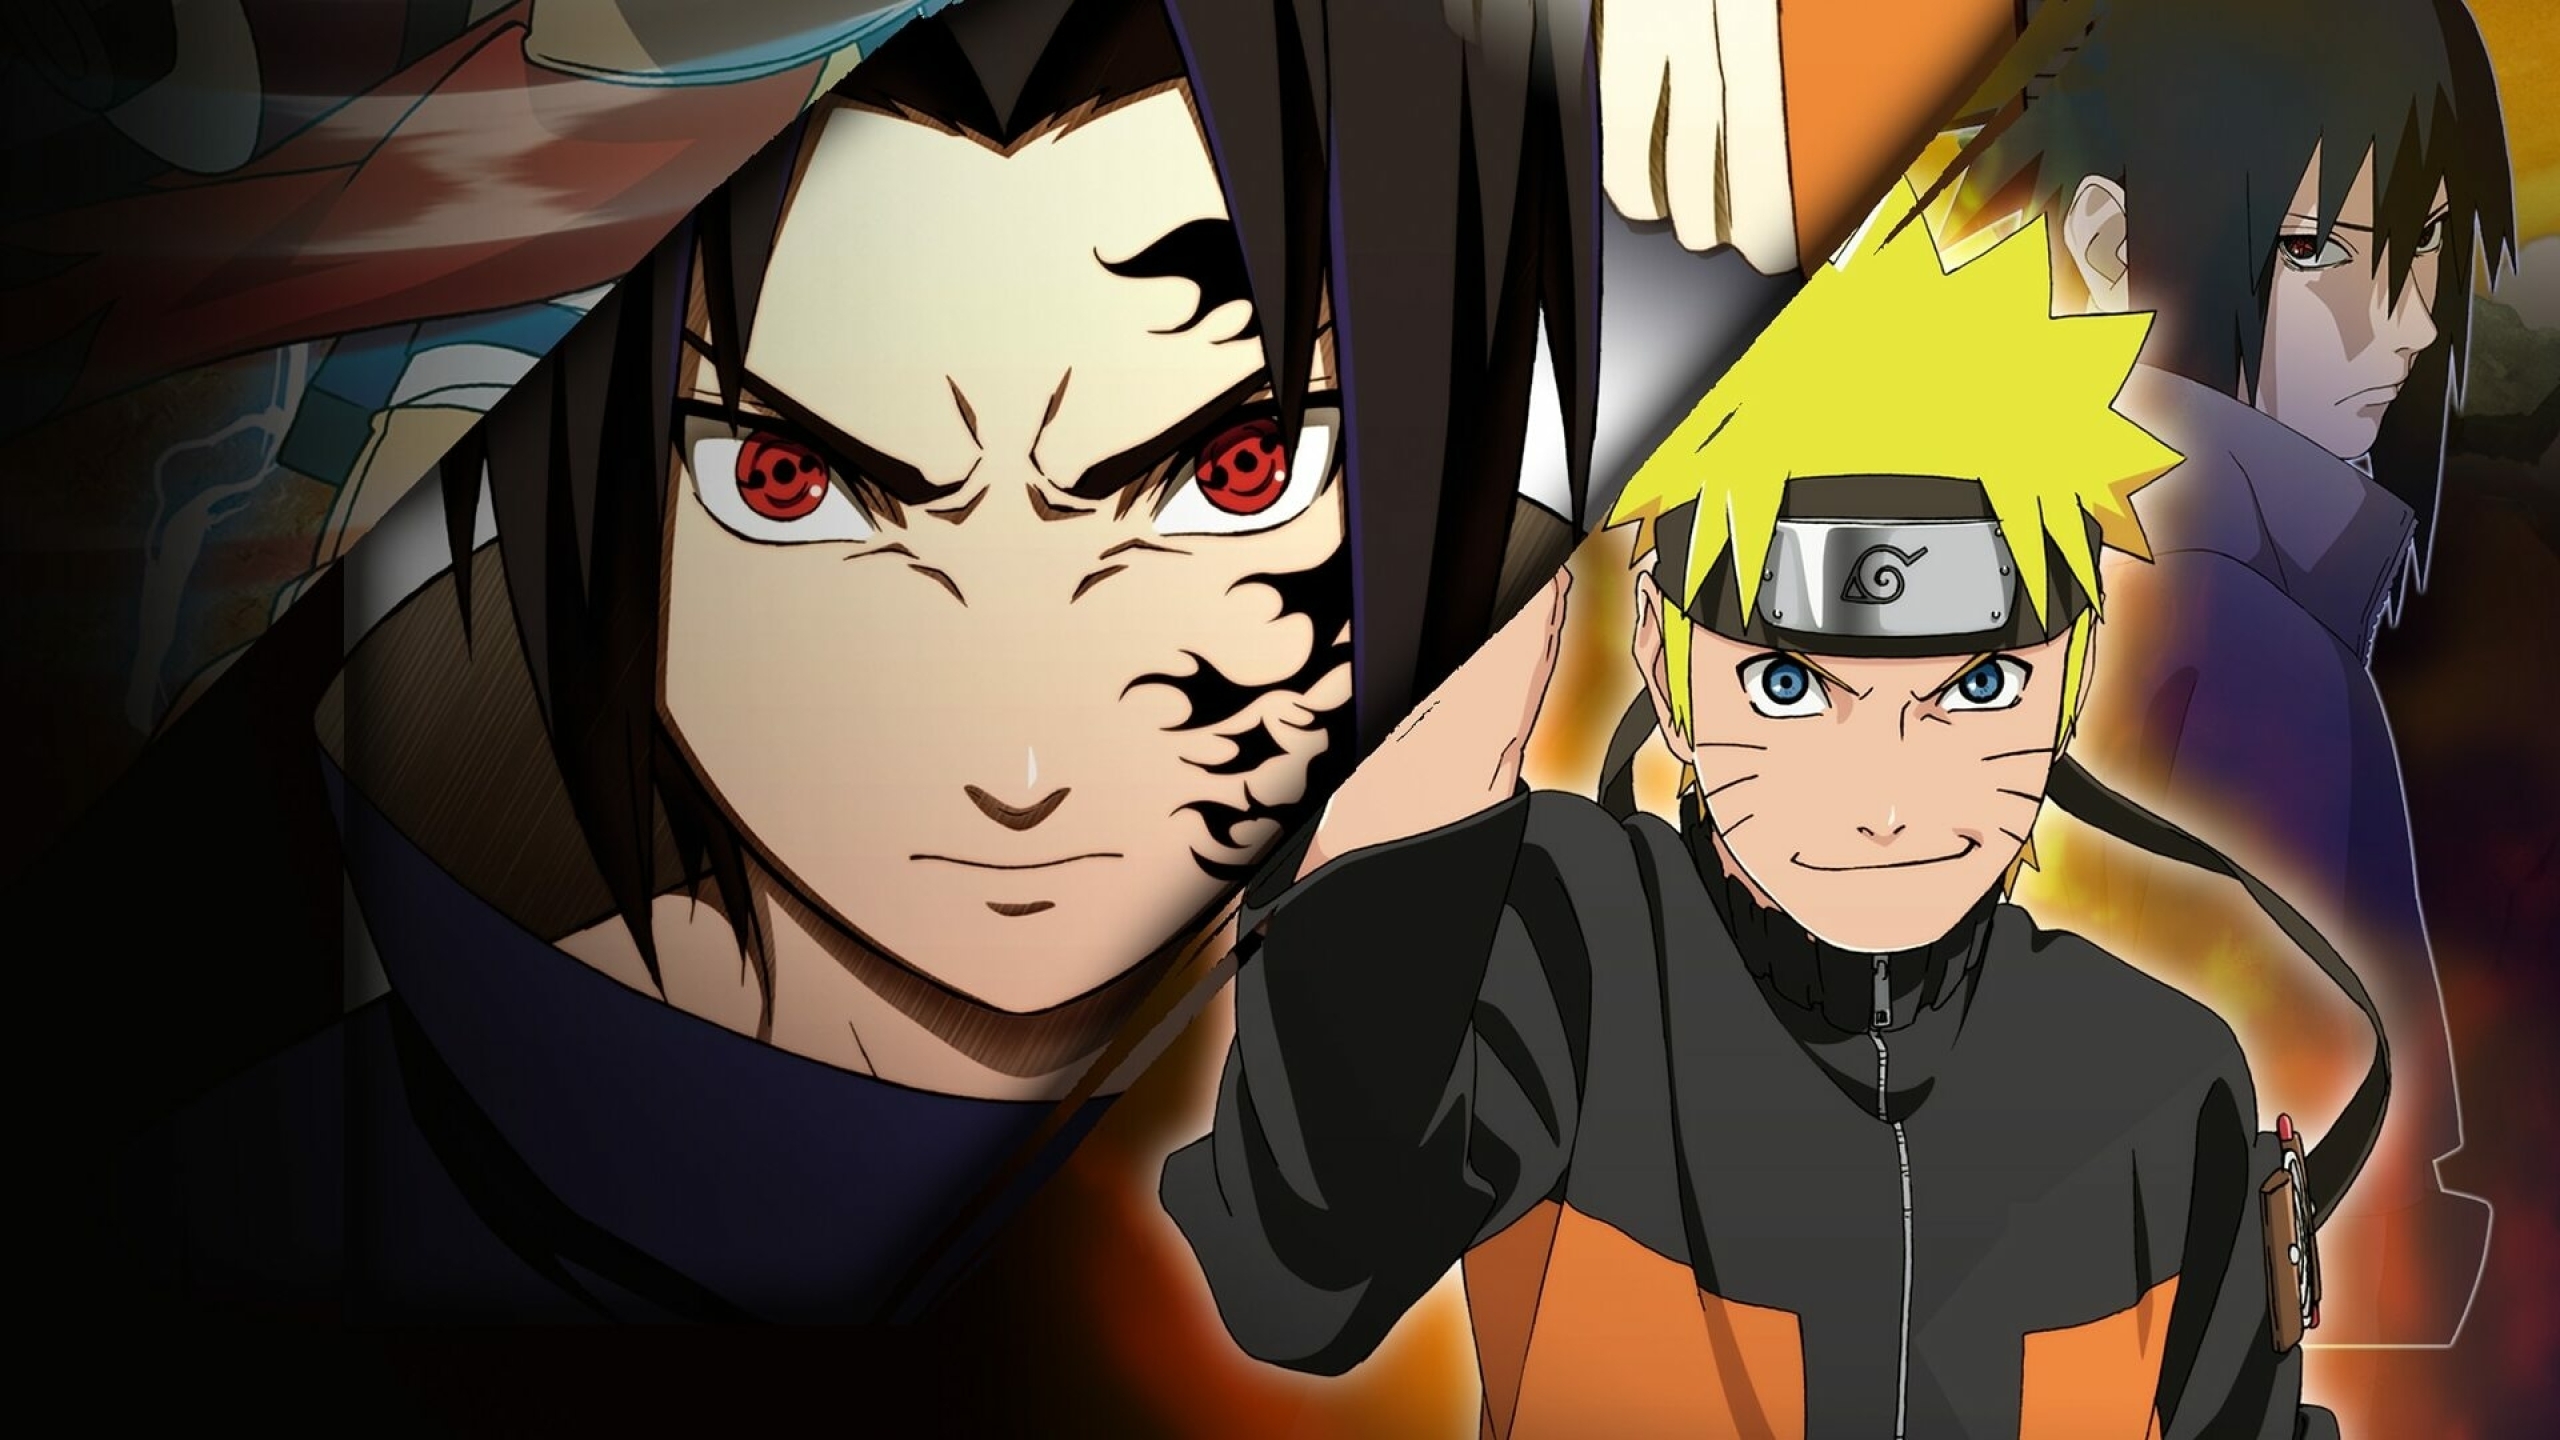 2560x1440 Naruto Uzumaki X Sasuke Uchiha Hd Art 1440p Resolution Wallpaper Hd Anime 4k Wallpapers Images Photos And Background Wallpapers Den